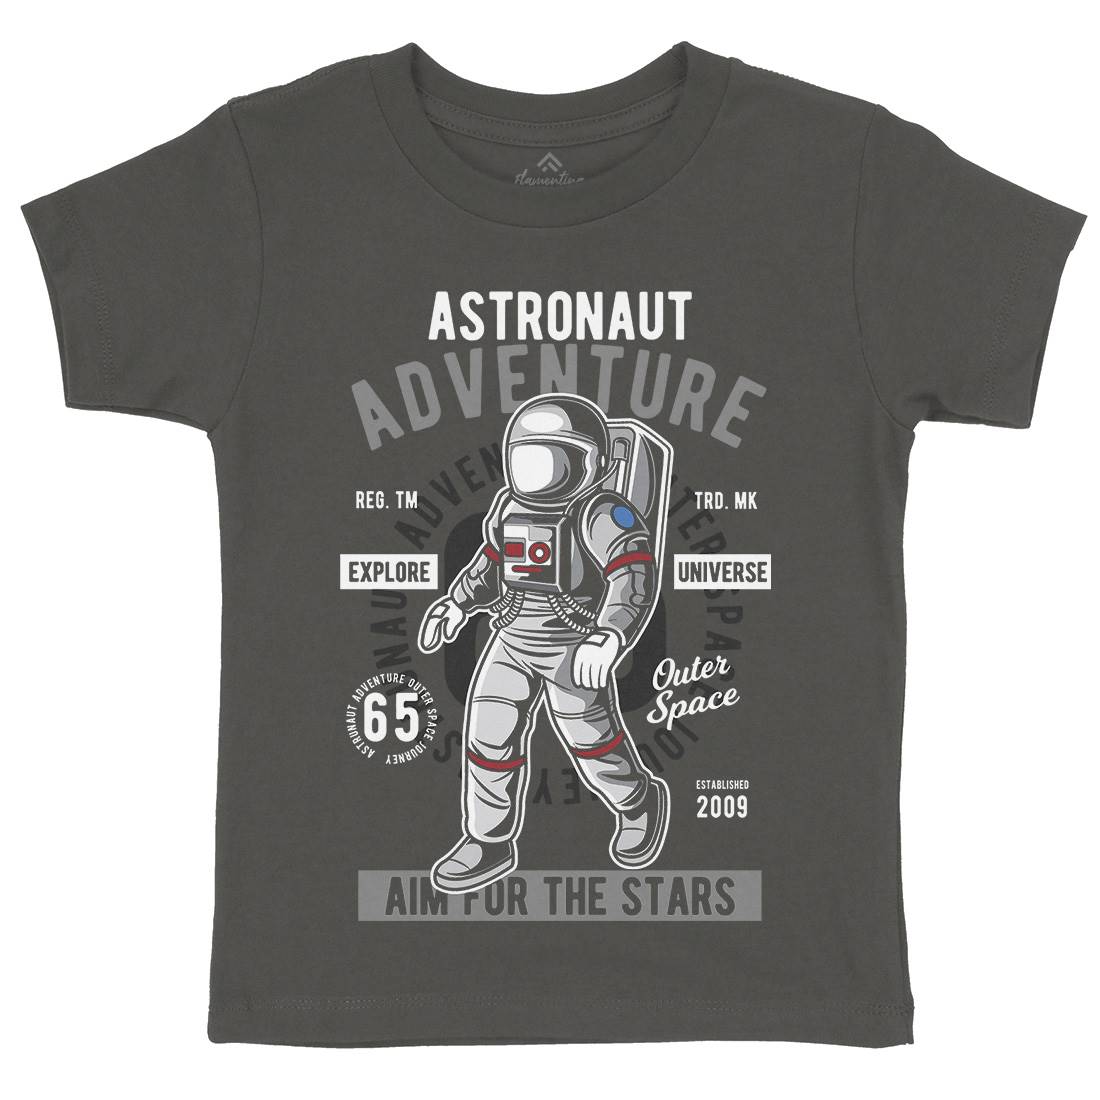 Astronaut Adventure Kids Crew Neck T-Shirt Space C307